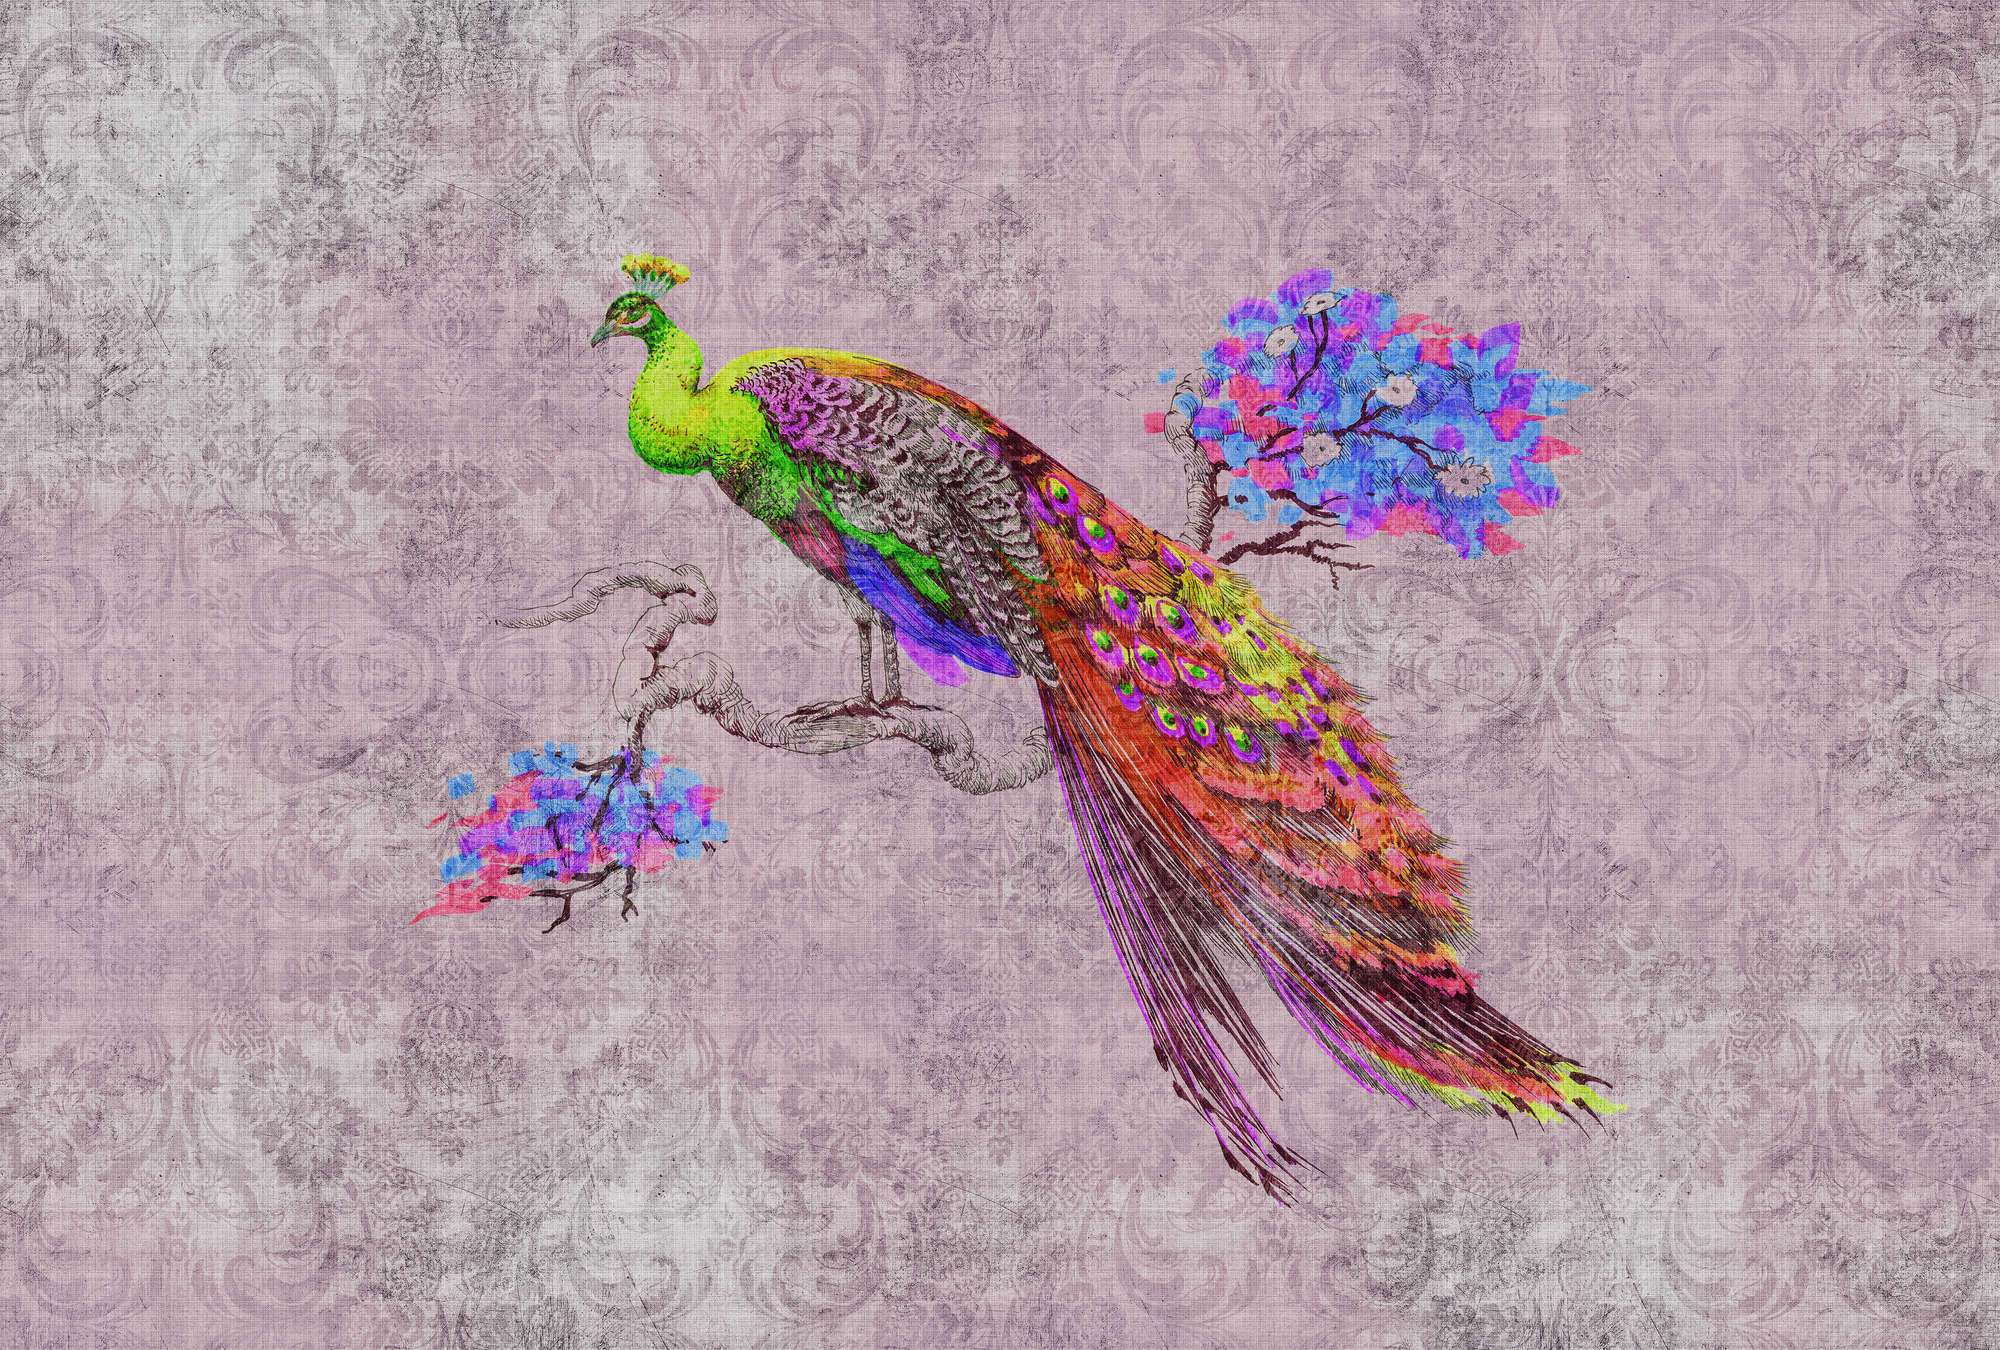             Peacock 2 - Fototapete mit Pfau Motiv & Ornament Muster in naturleinen Struktur – Grün, Rosa | Perlmutt Glattvlies
        